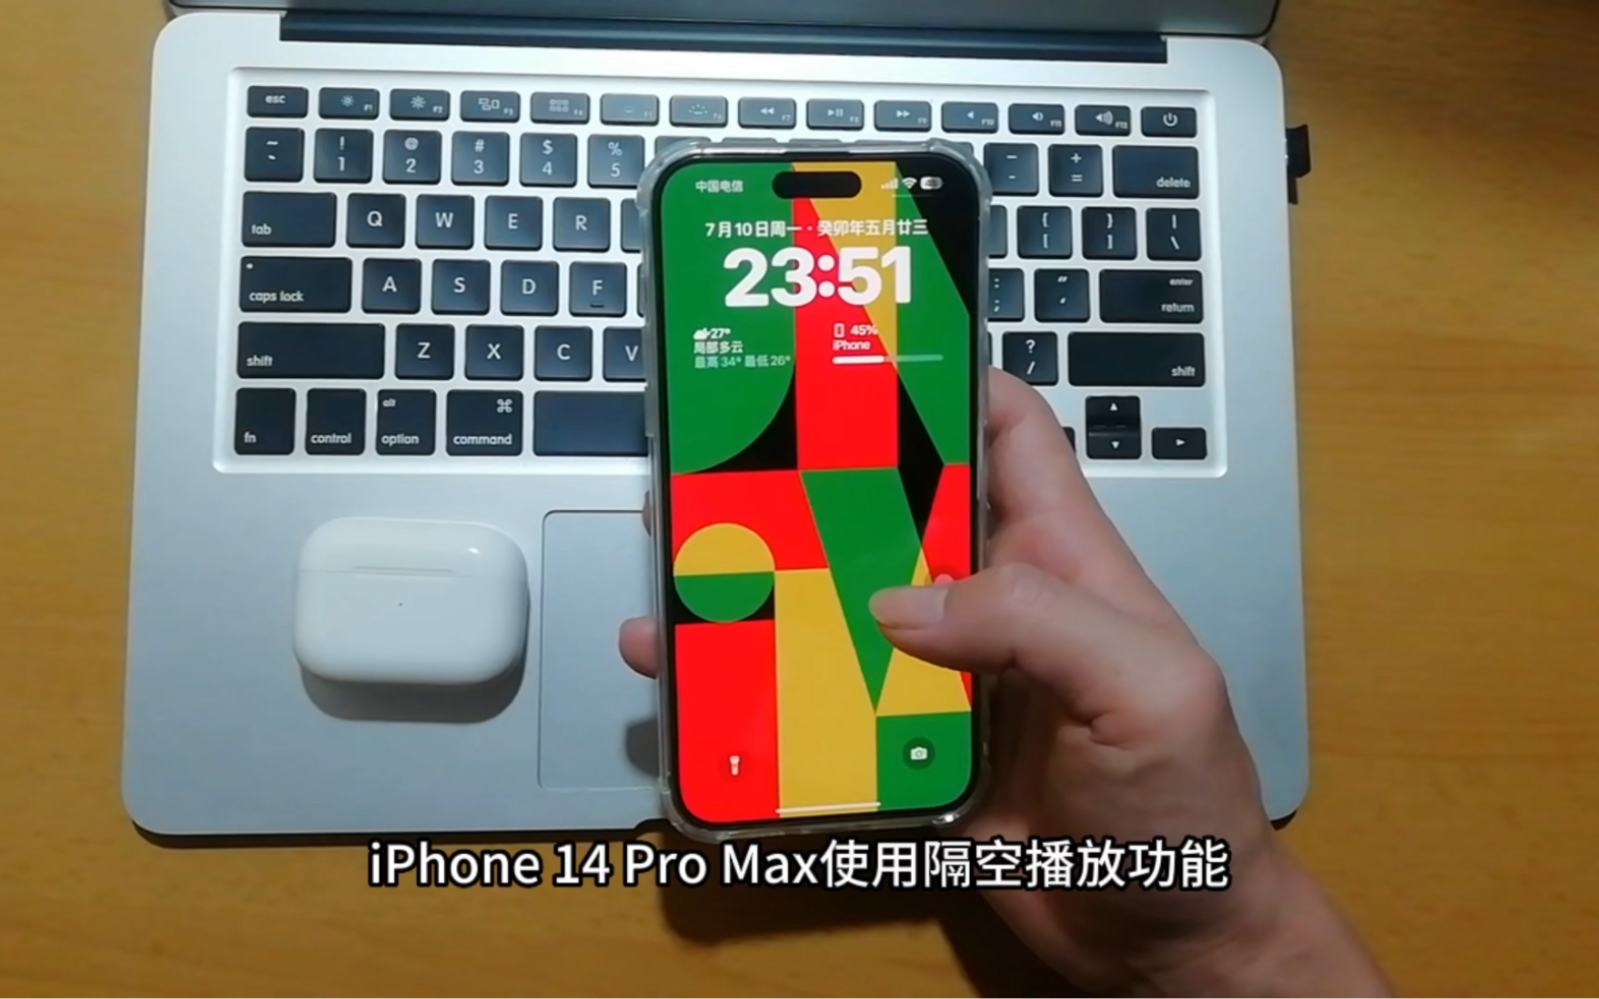 iPhone 14 Pro Max使用隔空播放功能